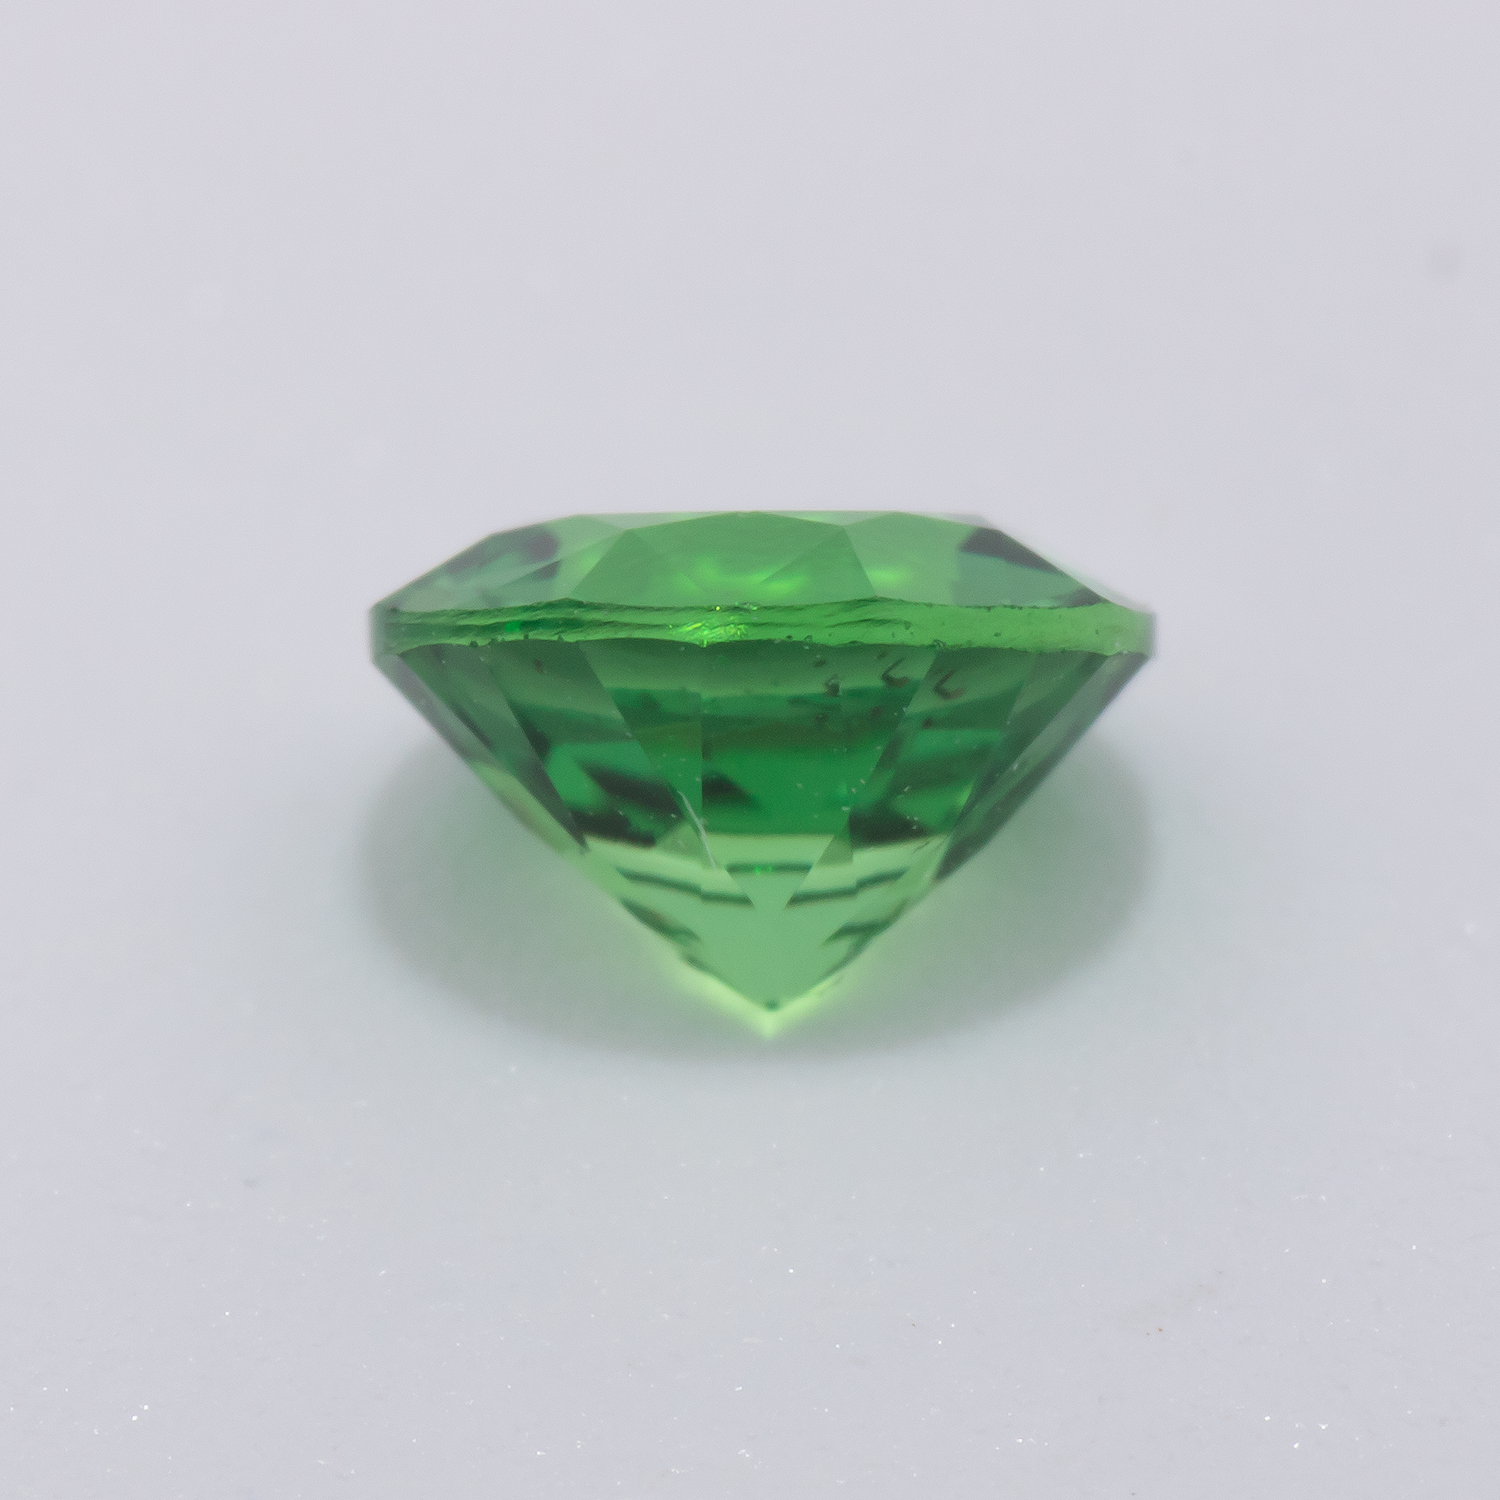 Tsavorit - grün, rund, 4.5x4.5 mm, 0.39 - 0.40 cts, Nr. TS91013